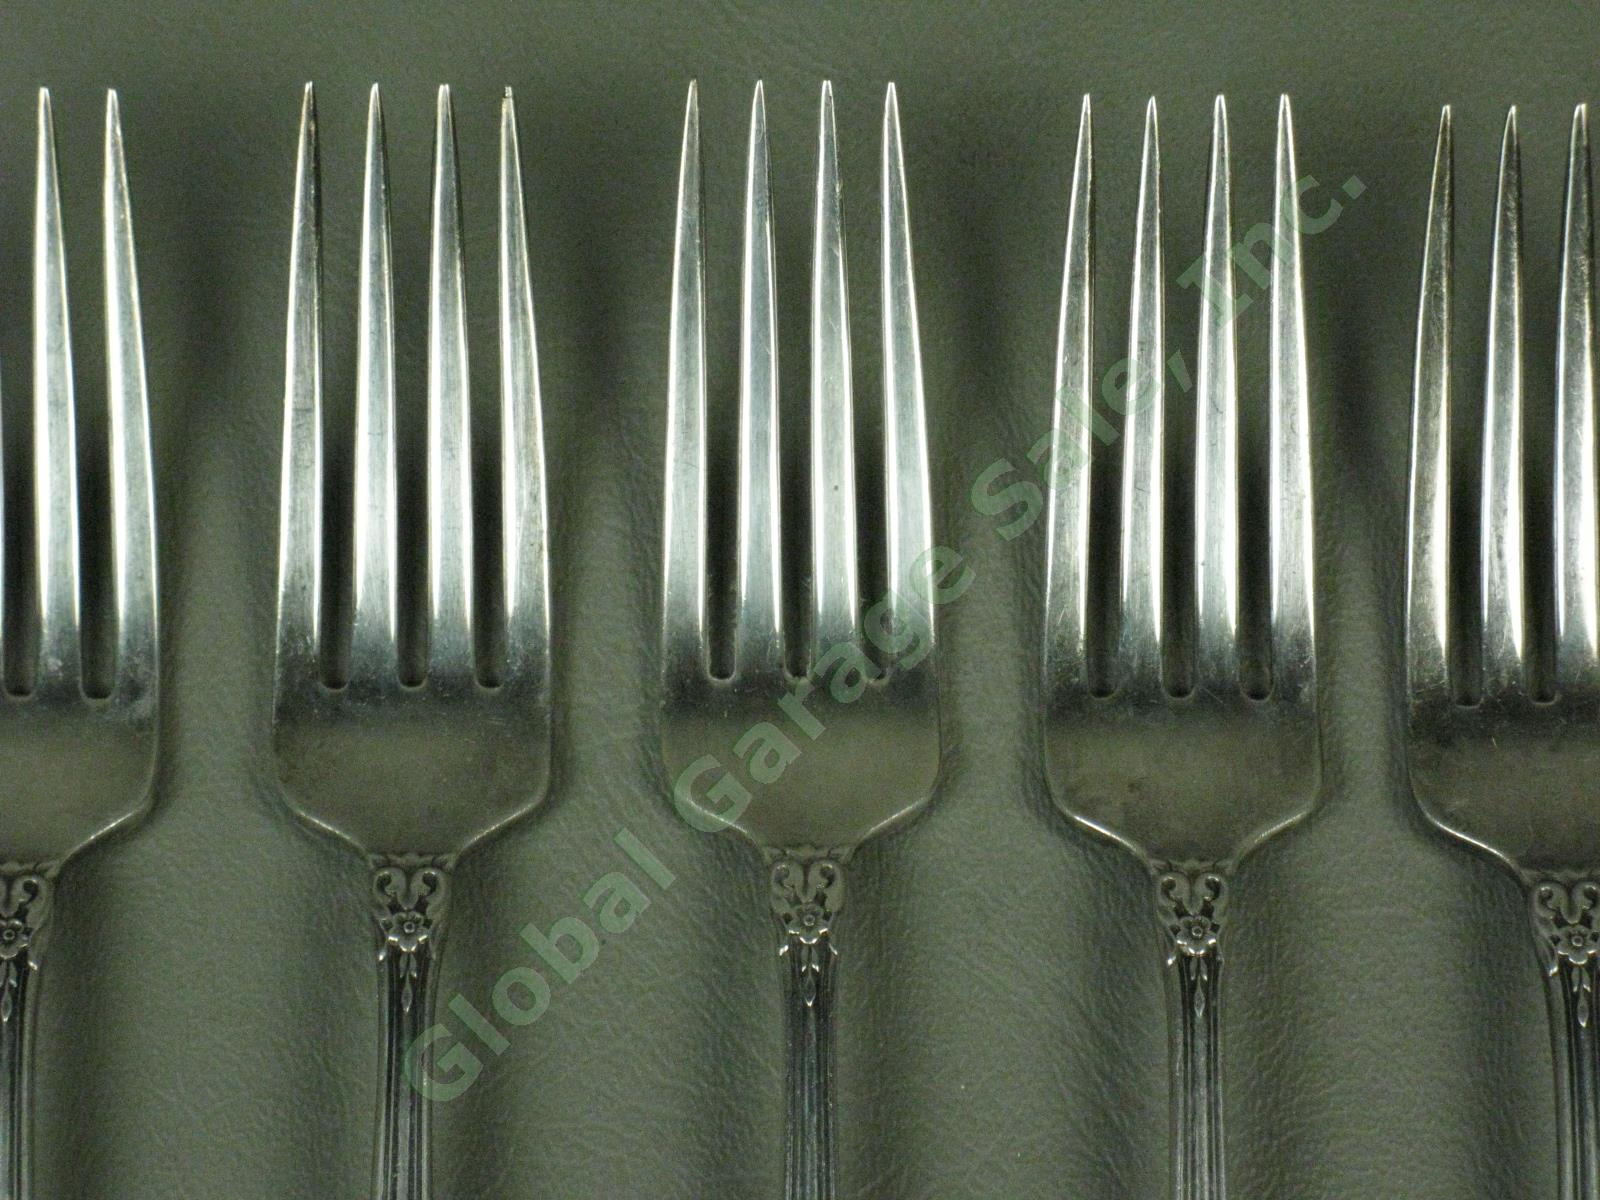 7 State House Inaugural Sterling Silver Dinner Forks Silverware Flatware Set NR! 1